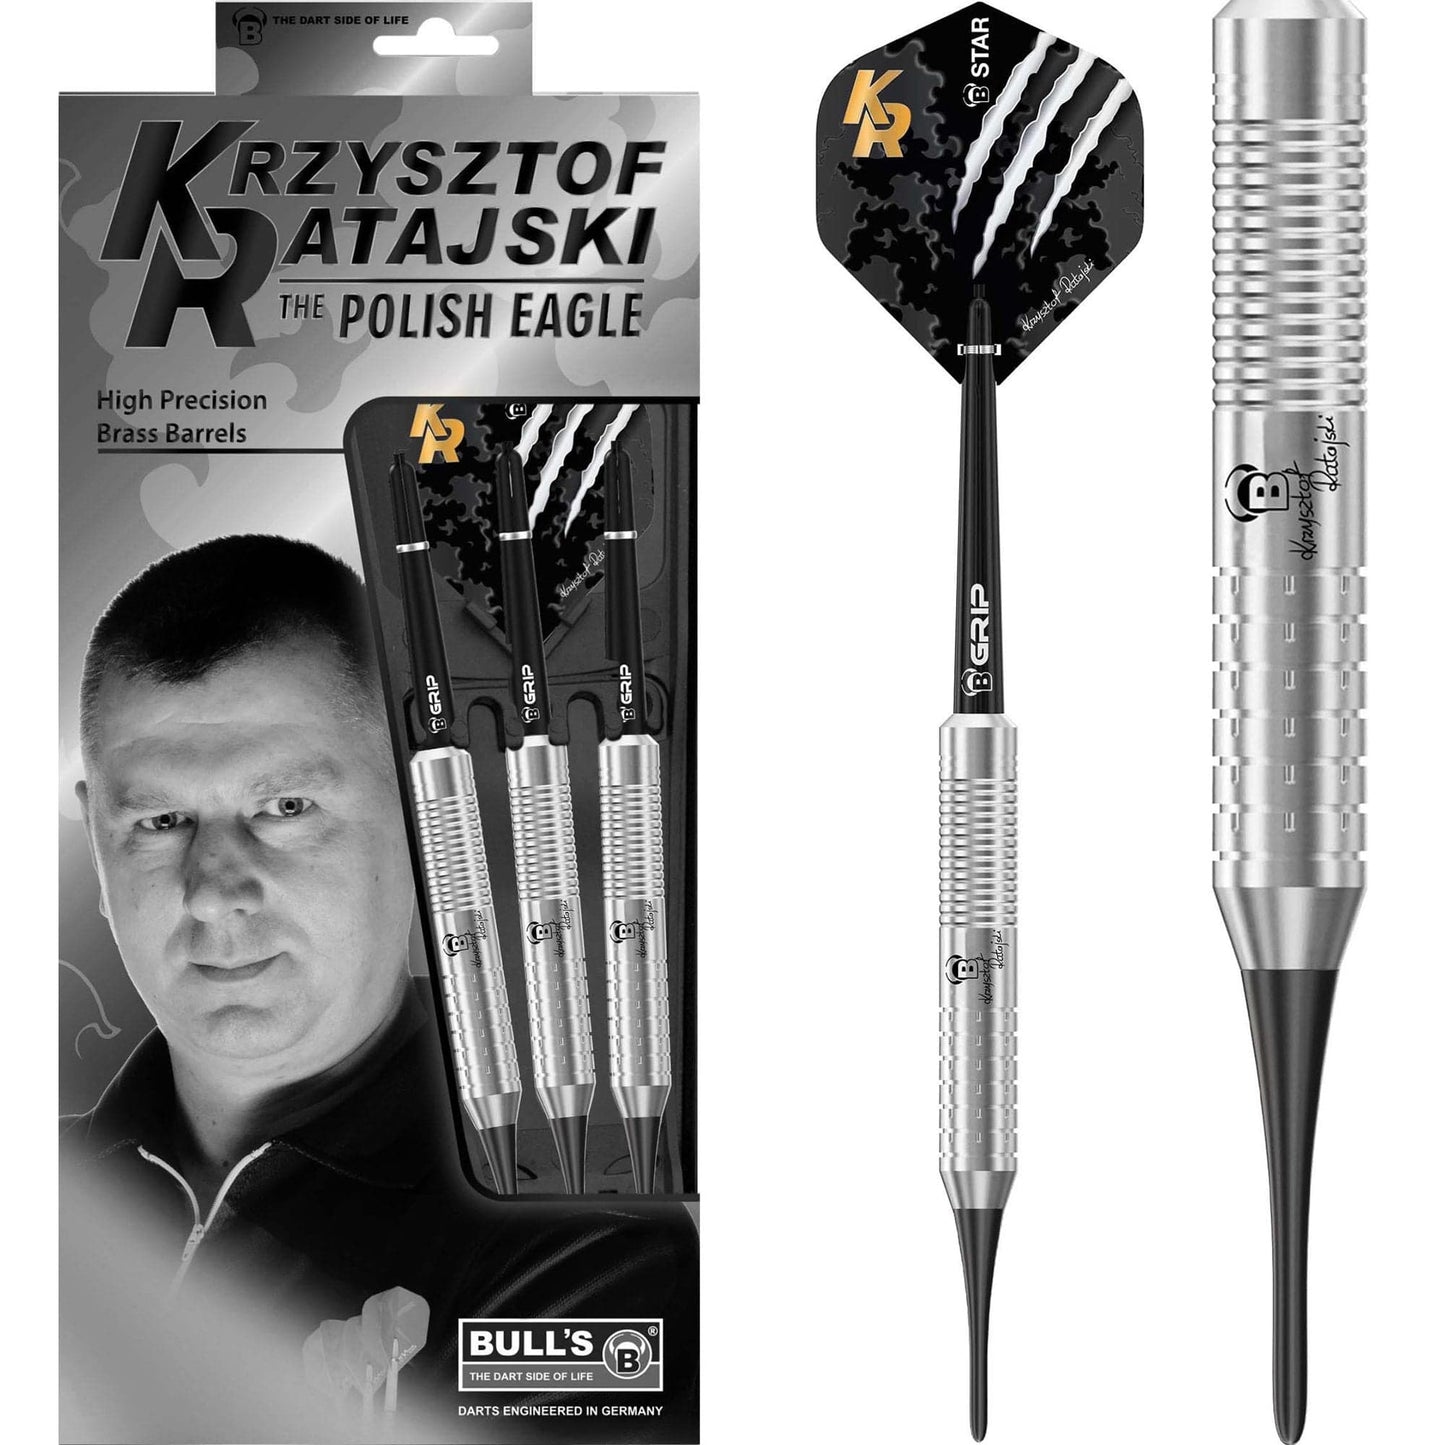 BULL'S Krzysztof Ratajski Darts - Soft Tip - The Polish Eagle - Brass - Silver 18g